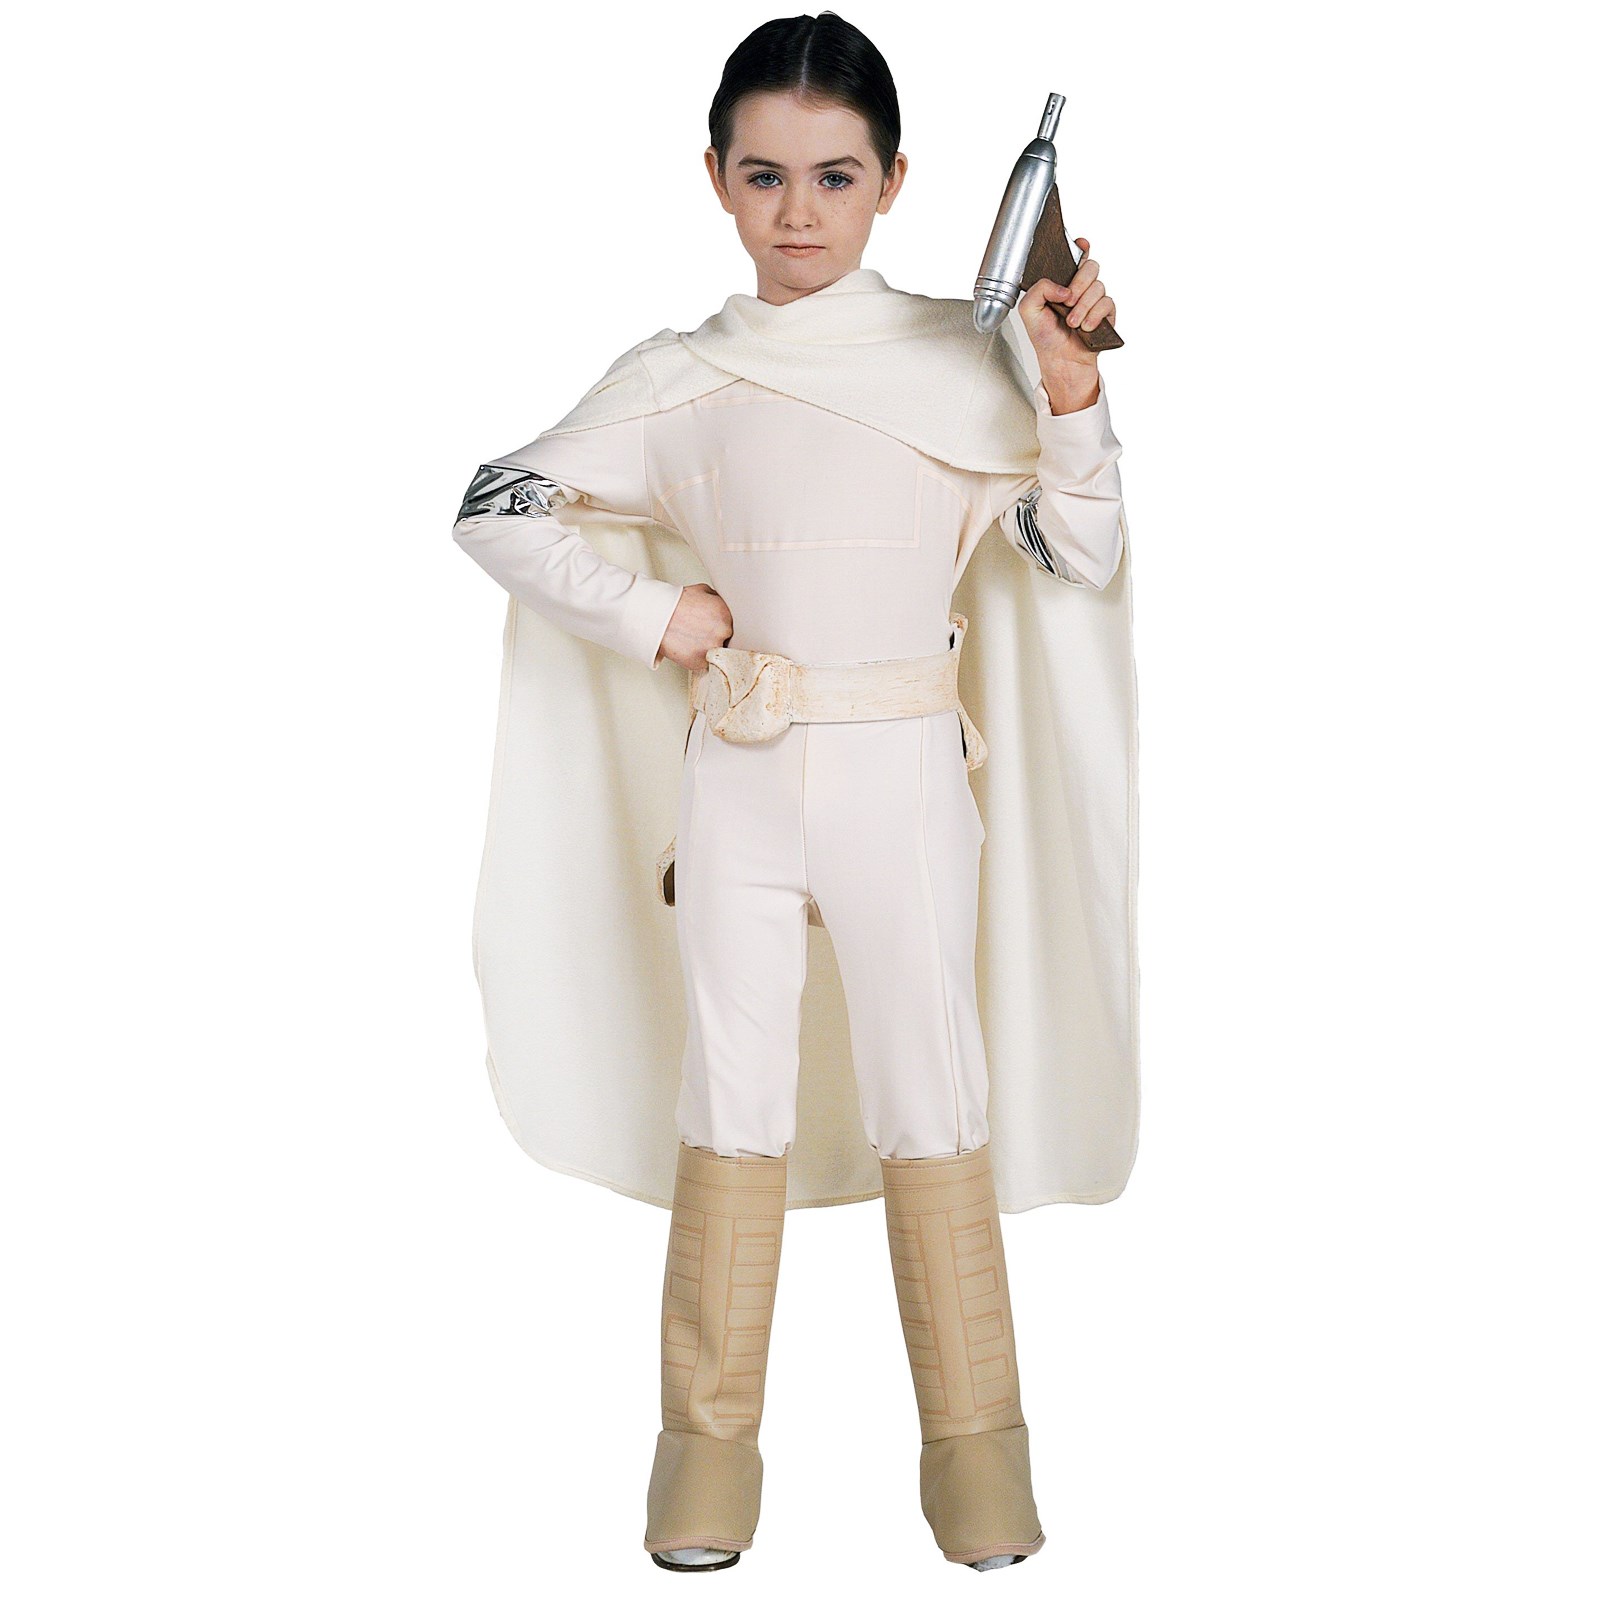 Star Wars Padme Amidala Deluxe Child Costume